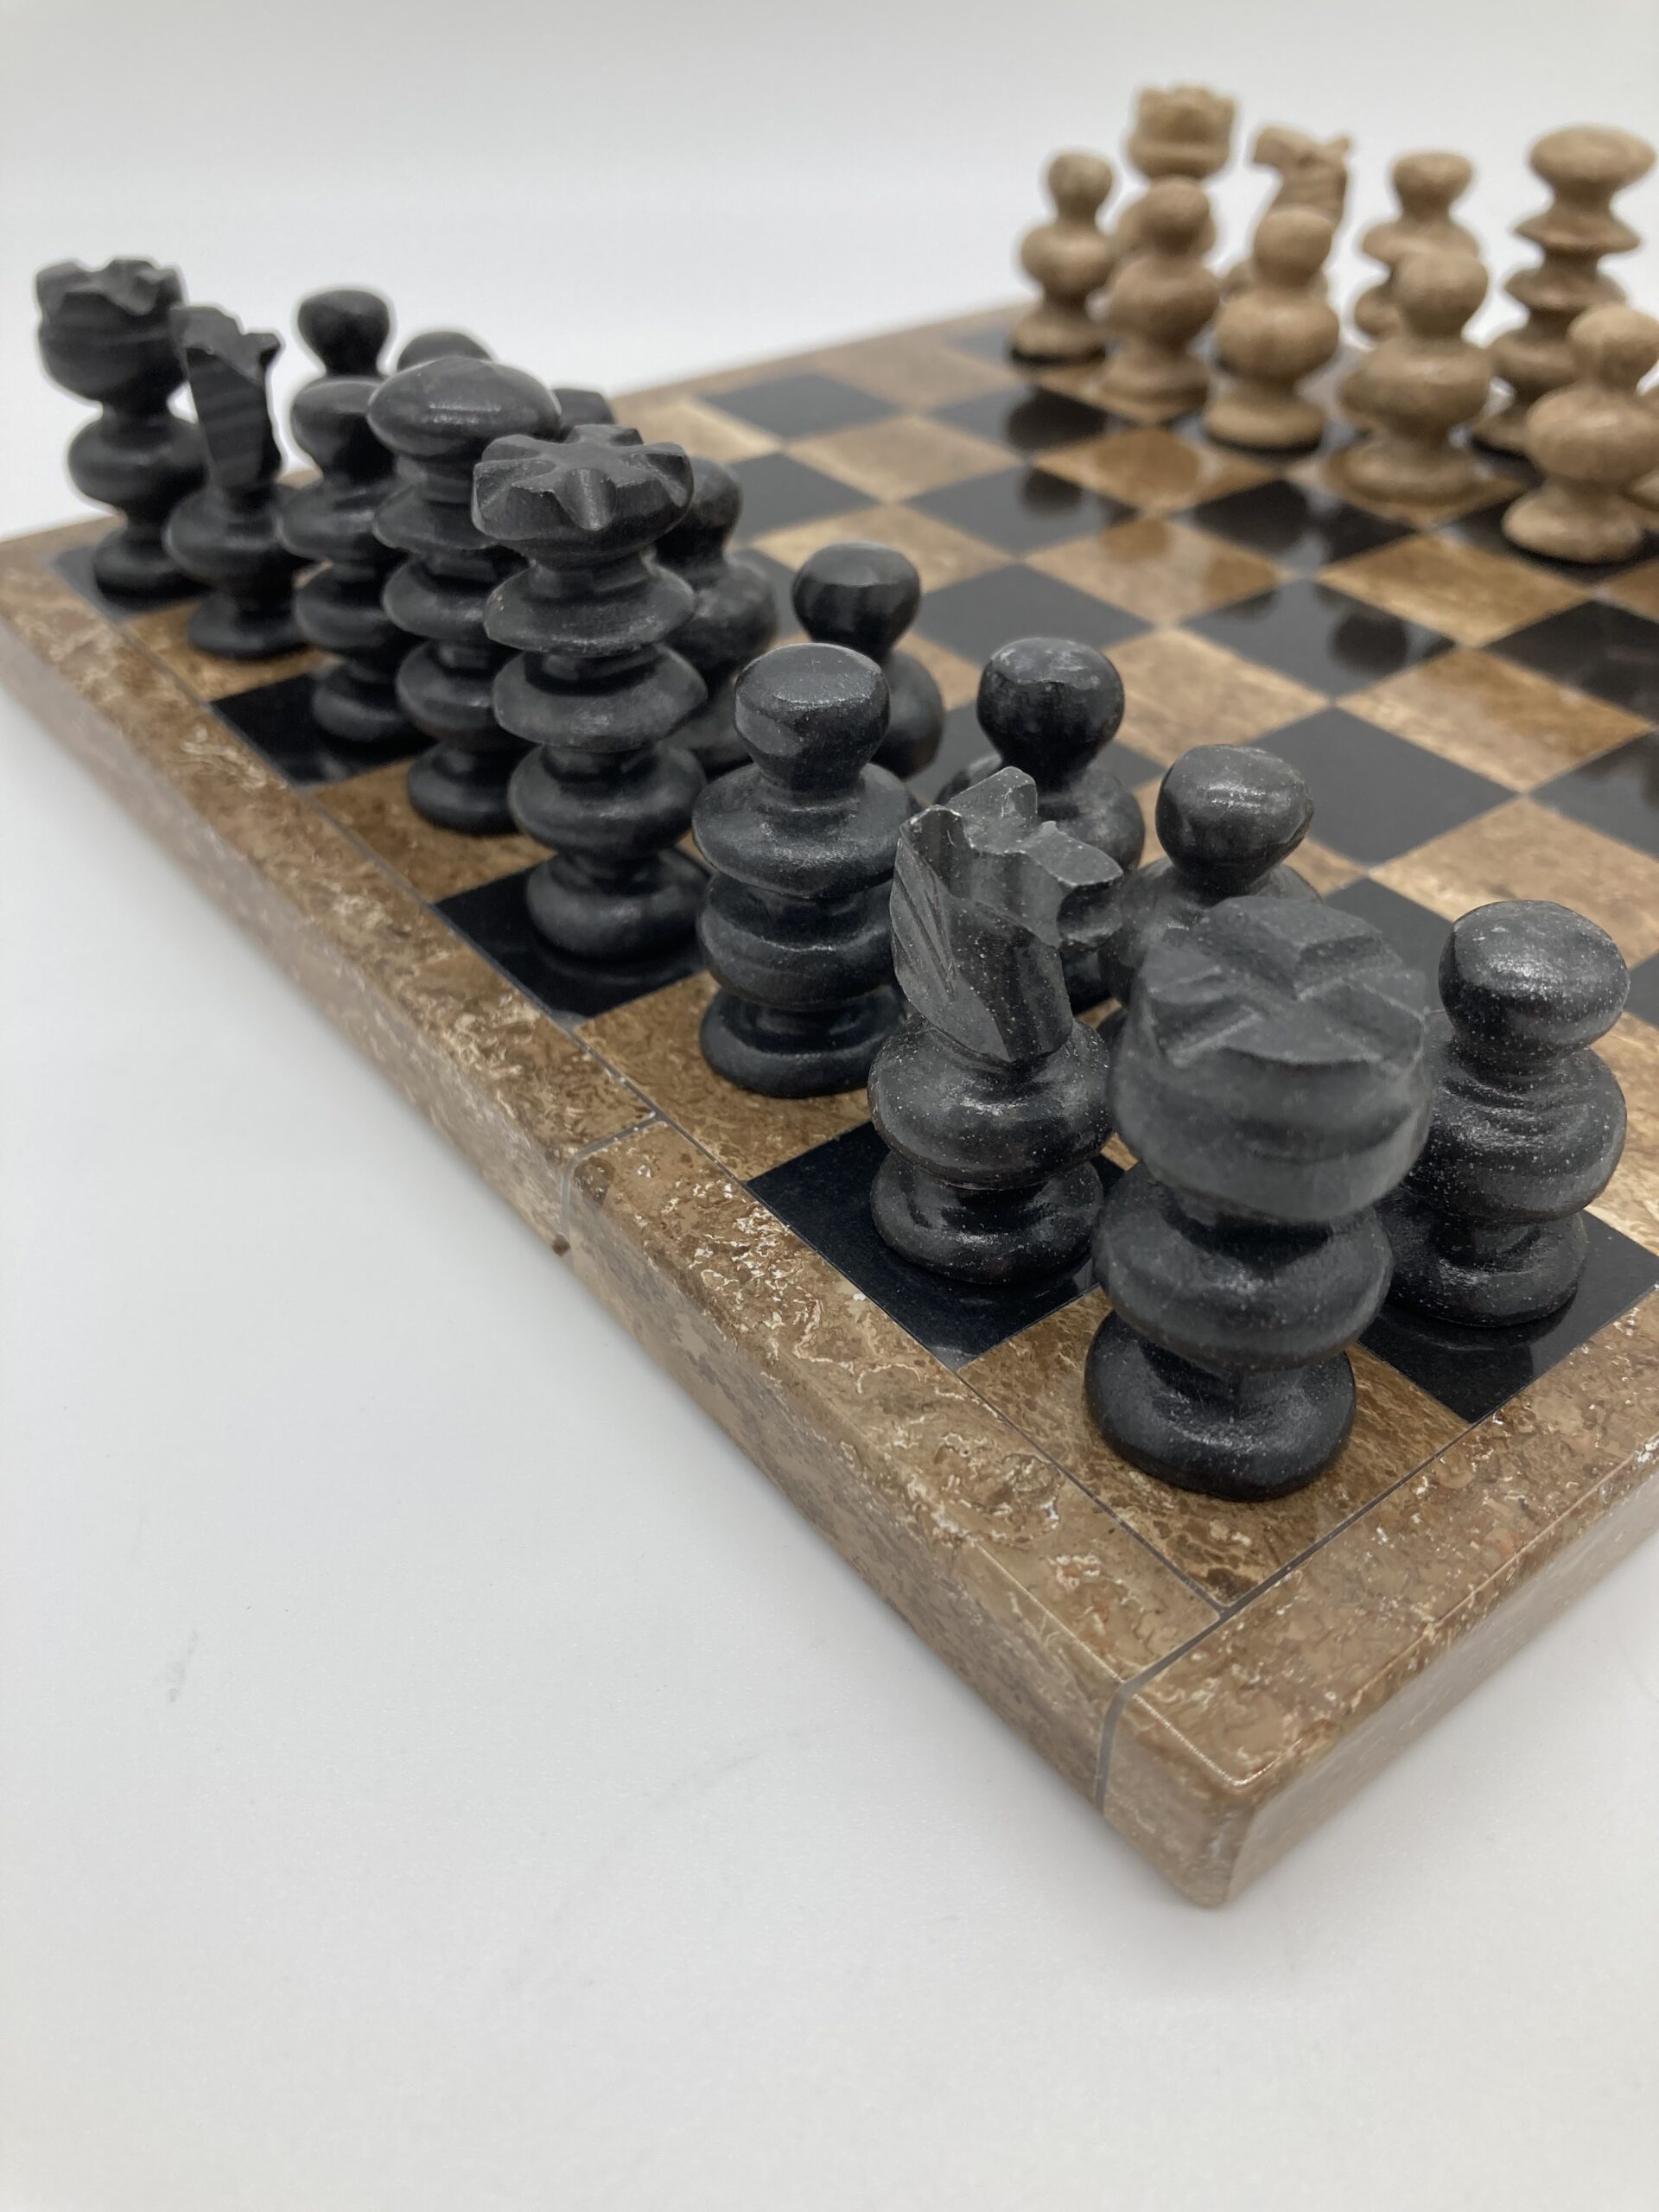 Onyx chess set closeup